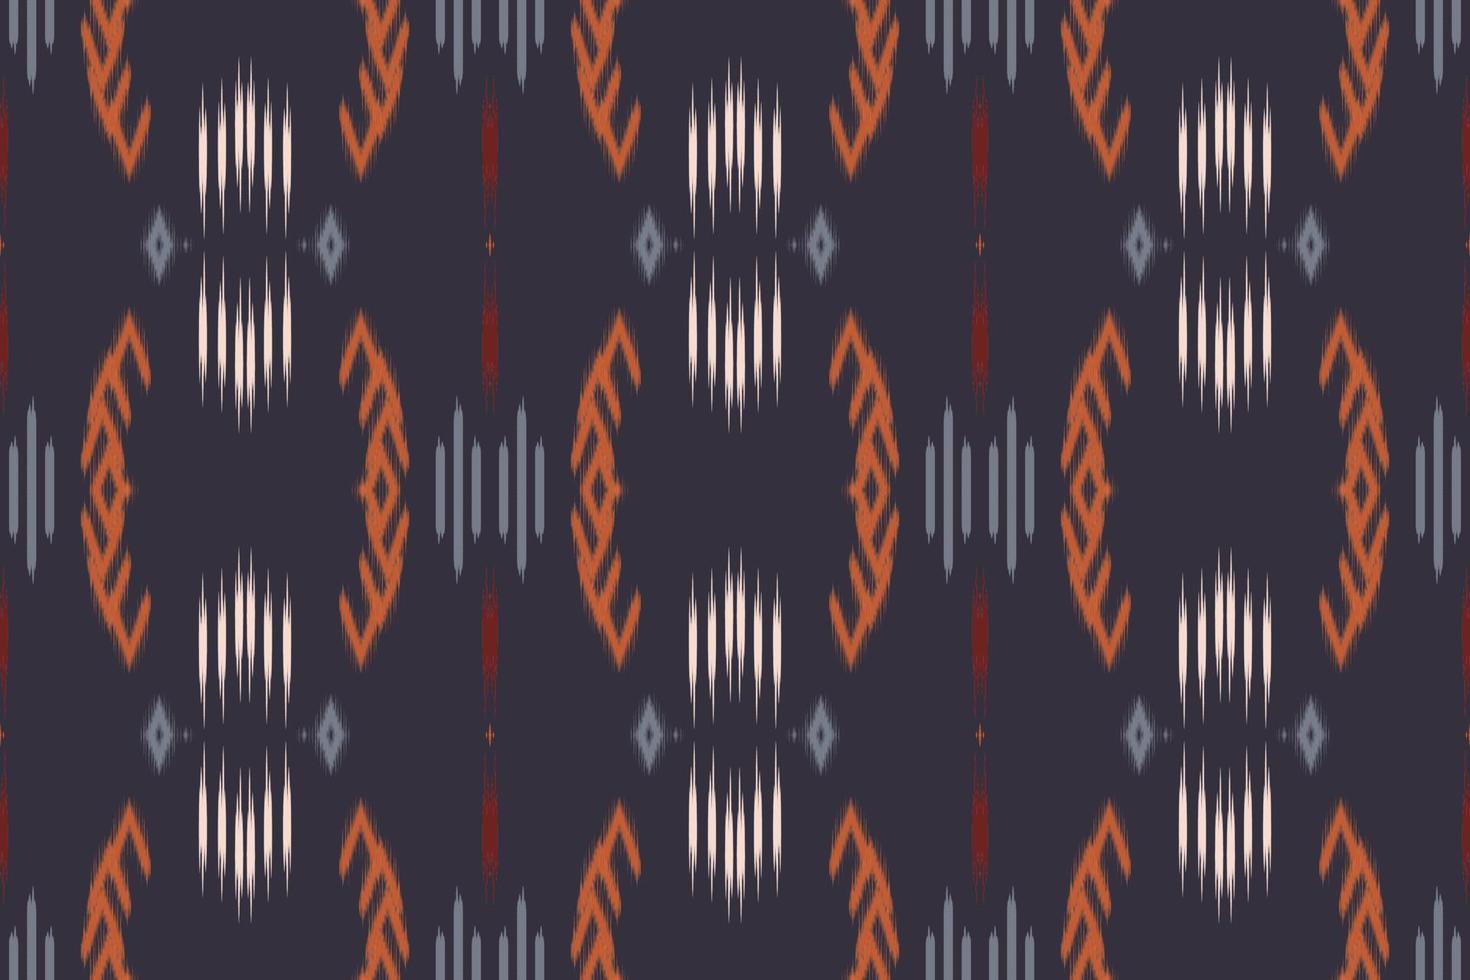 ikat puntos fondos tribales de patrones sin fisuras. étnico geométrico ikkat batik vector digital diseño textil para estampados tela sari mughal cepillo símbolo franjas textura kurti kurtis kurtas